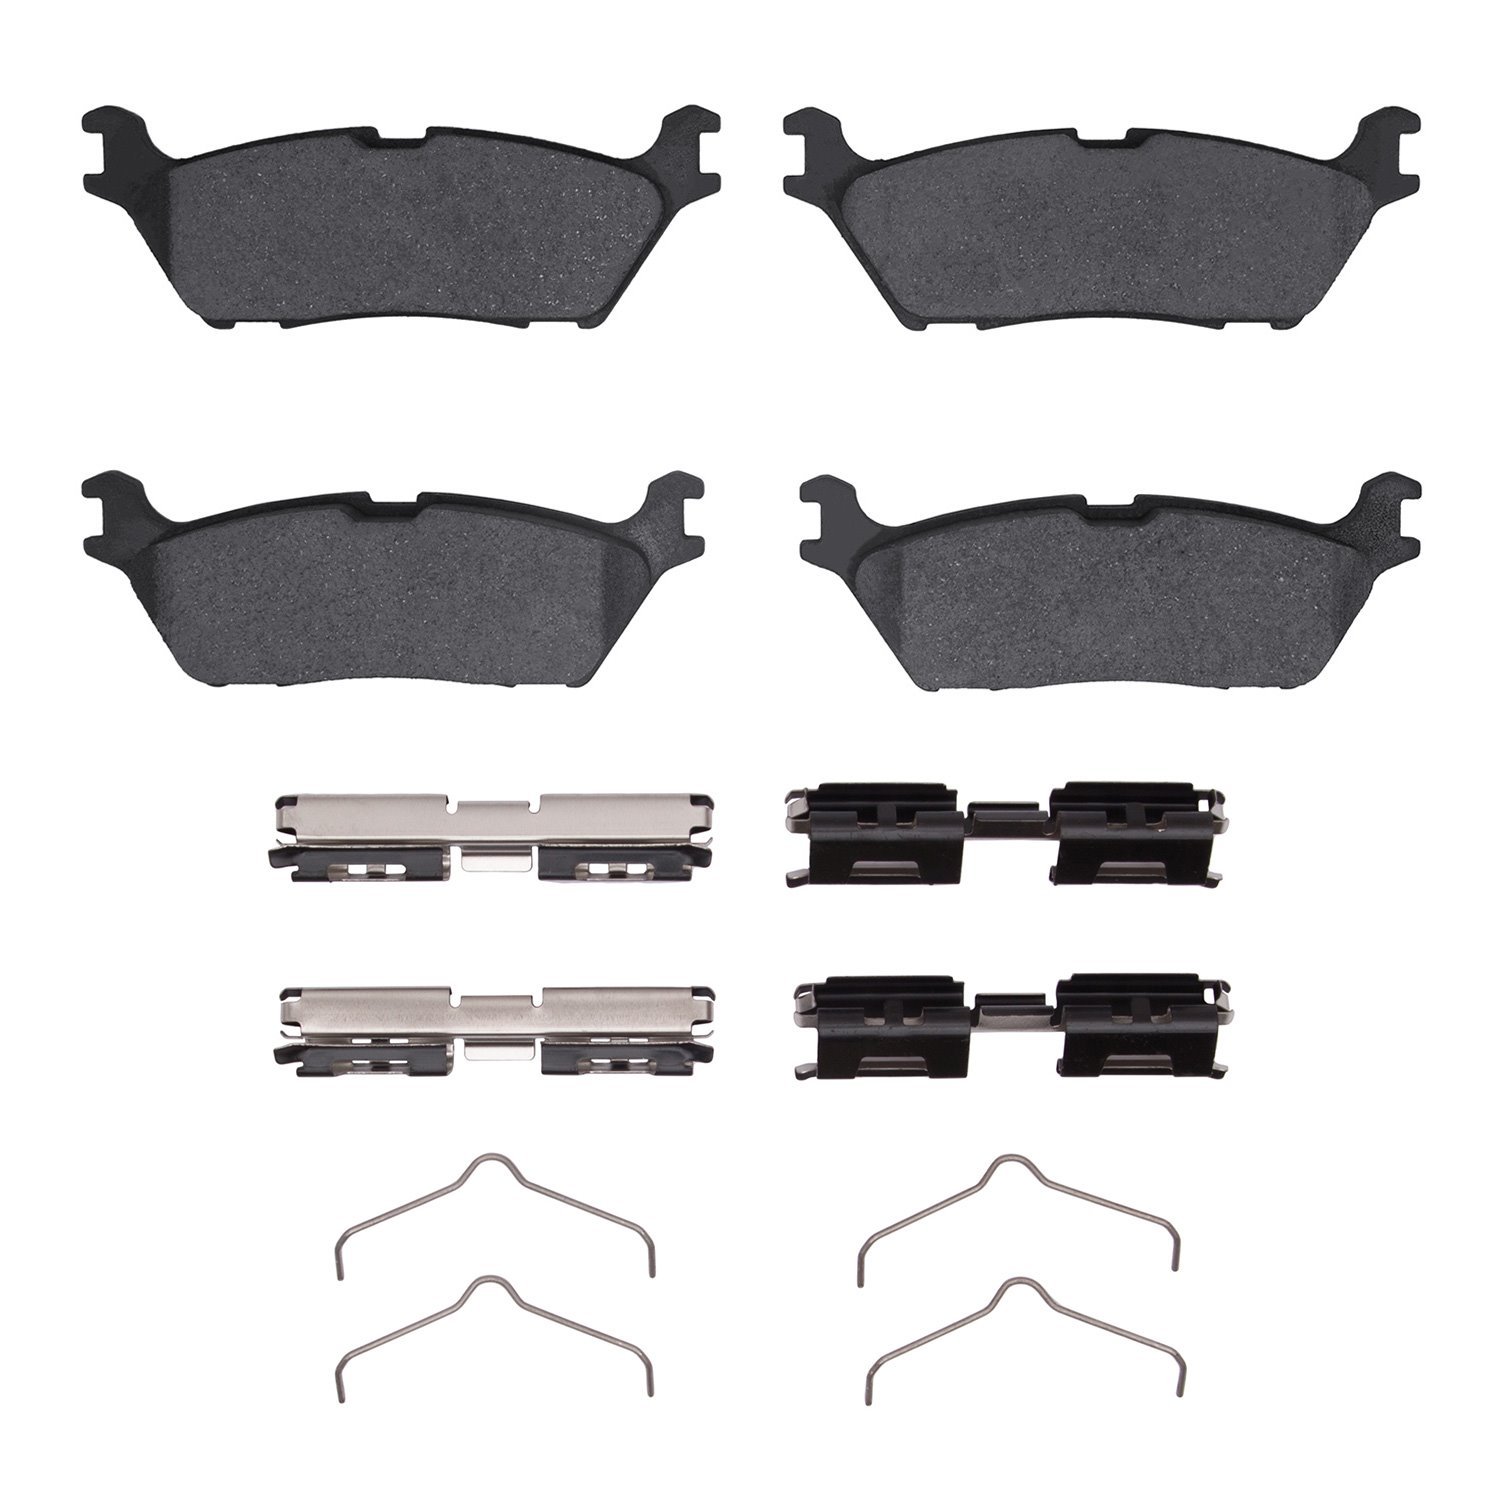 1552-2383-01 5000 Advanced Semi-Metallic Brake Pads & Hardware Kit, Fits Select Ford/Lincoln/Mercury/Mazda, Position: Rear